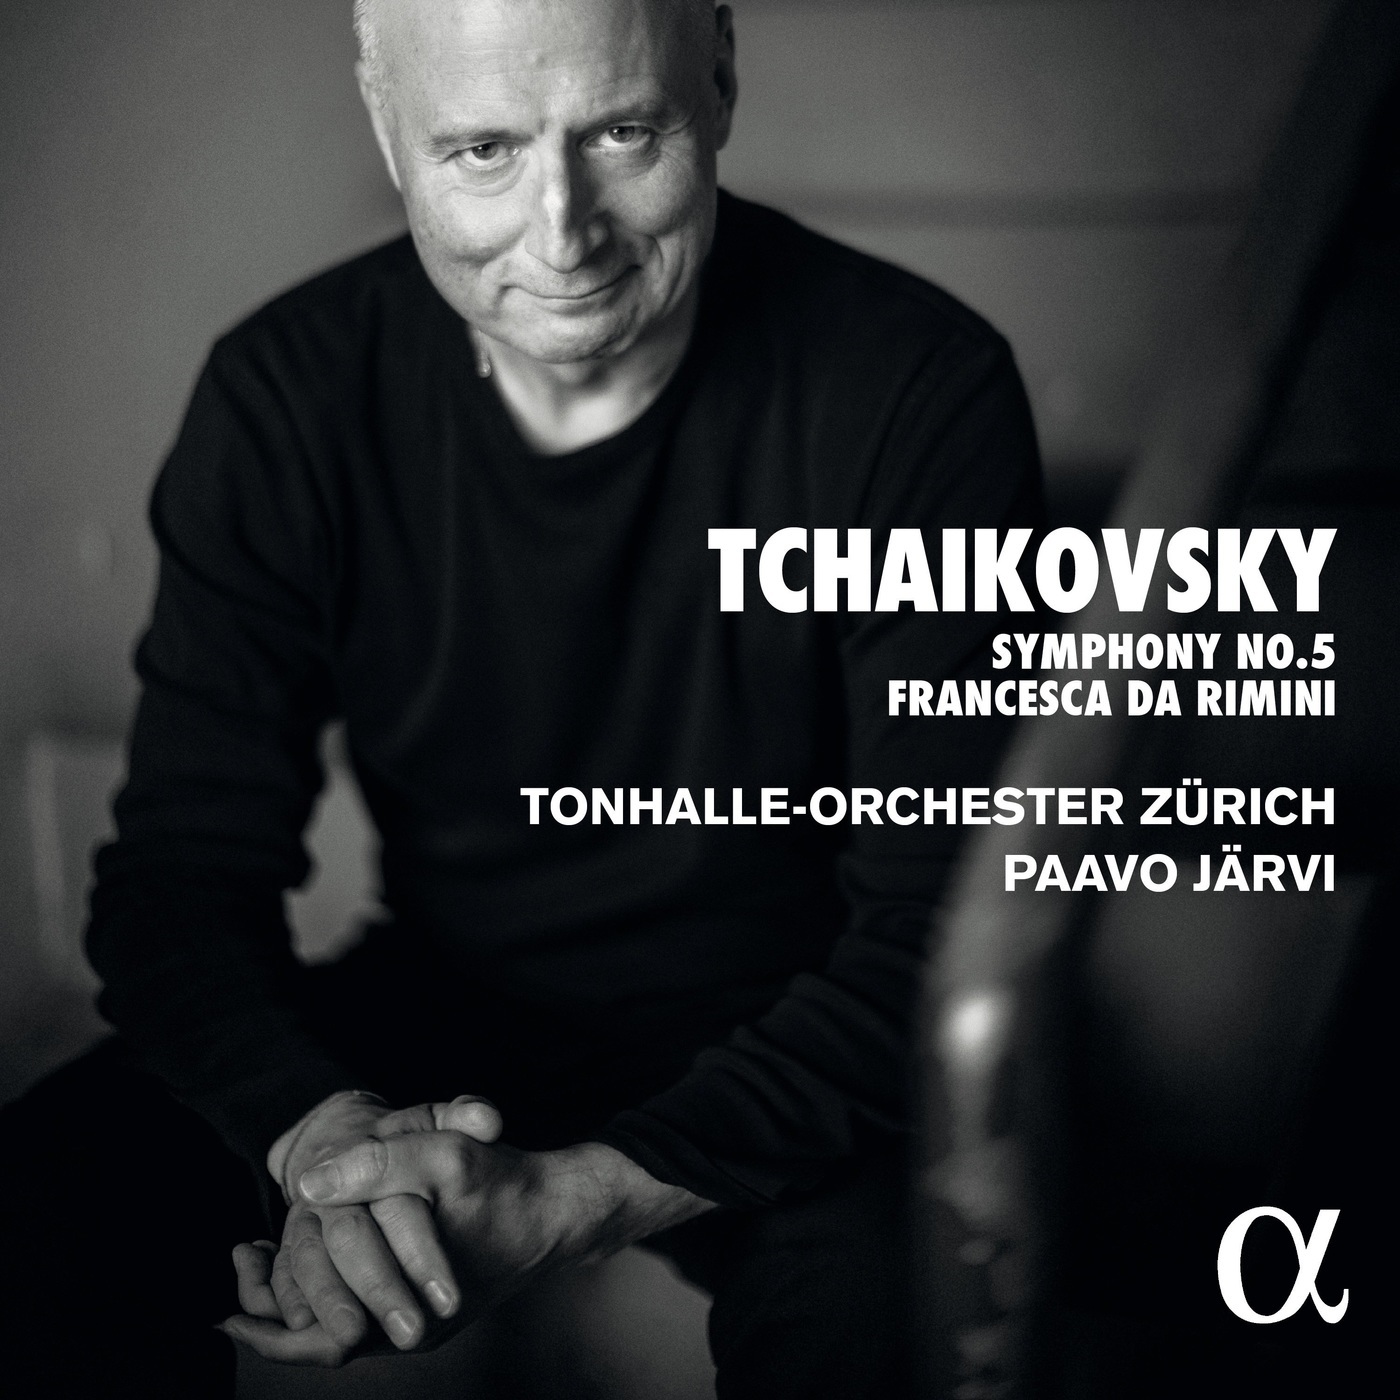 Tonhalle-Orchester Zurich & Paavo Jarvi - Tchaikovsky: Symphony No. 5 & Francesca da Rimini (2020) [FLAC 24bit/96kHz]